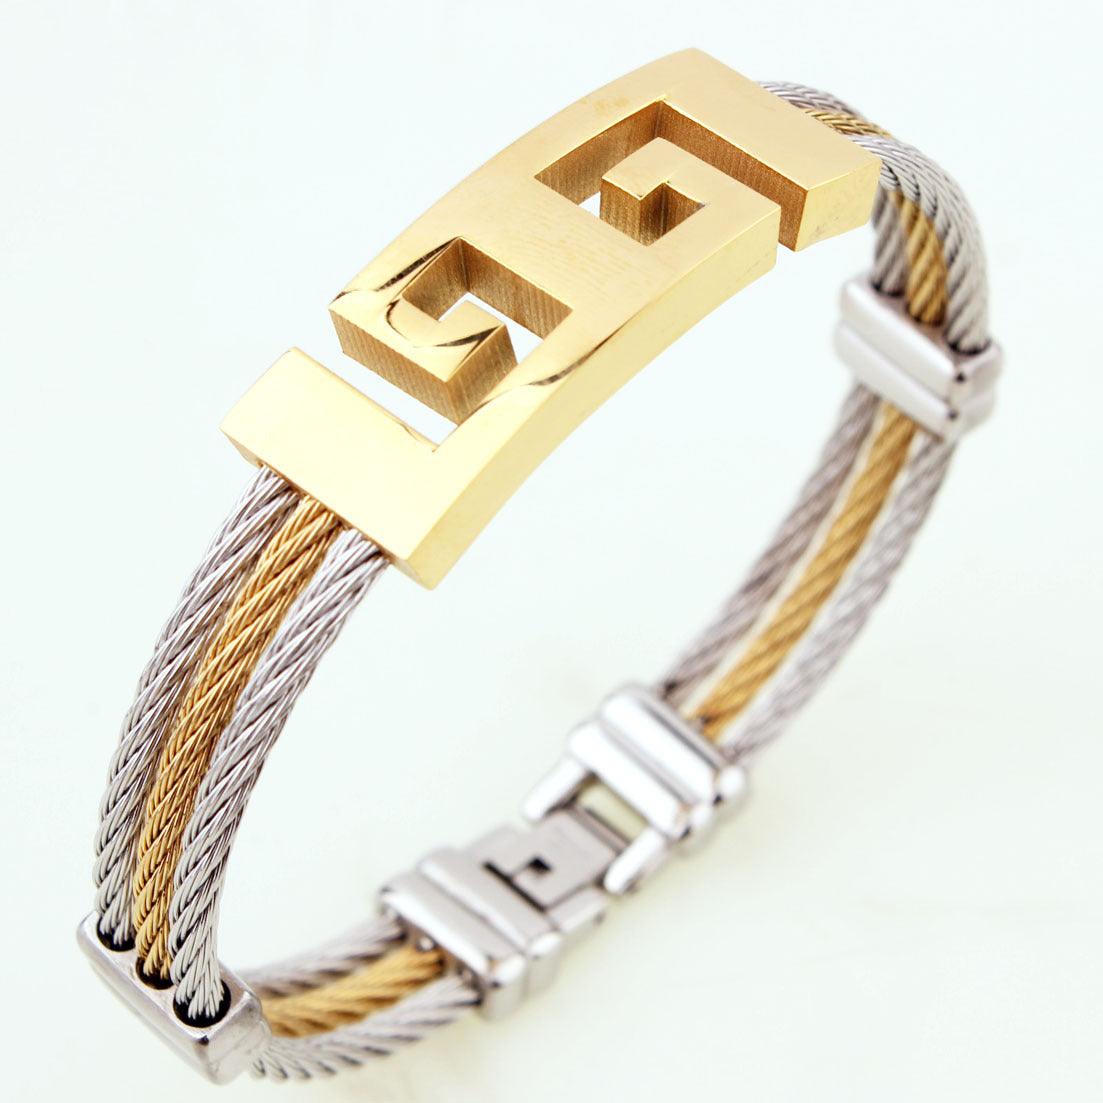 Three-ring wire braided hemp rope bracelet - BUNNY BAZAR